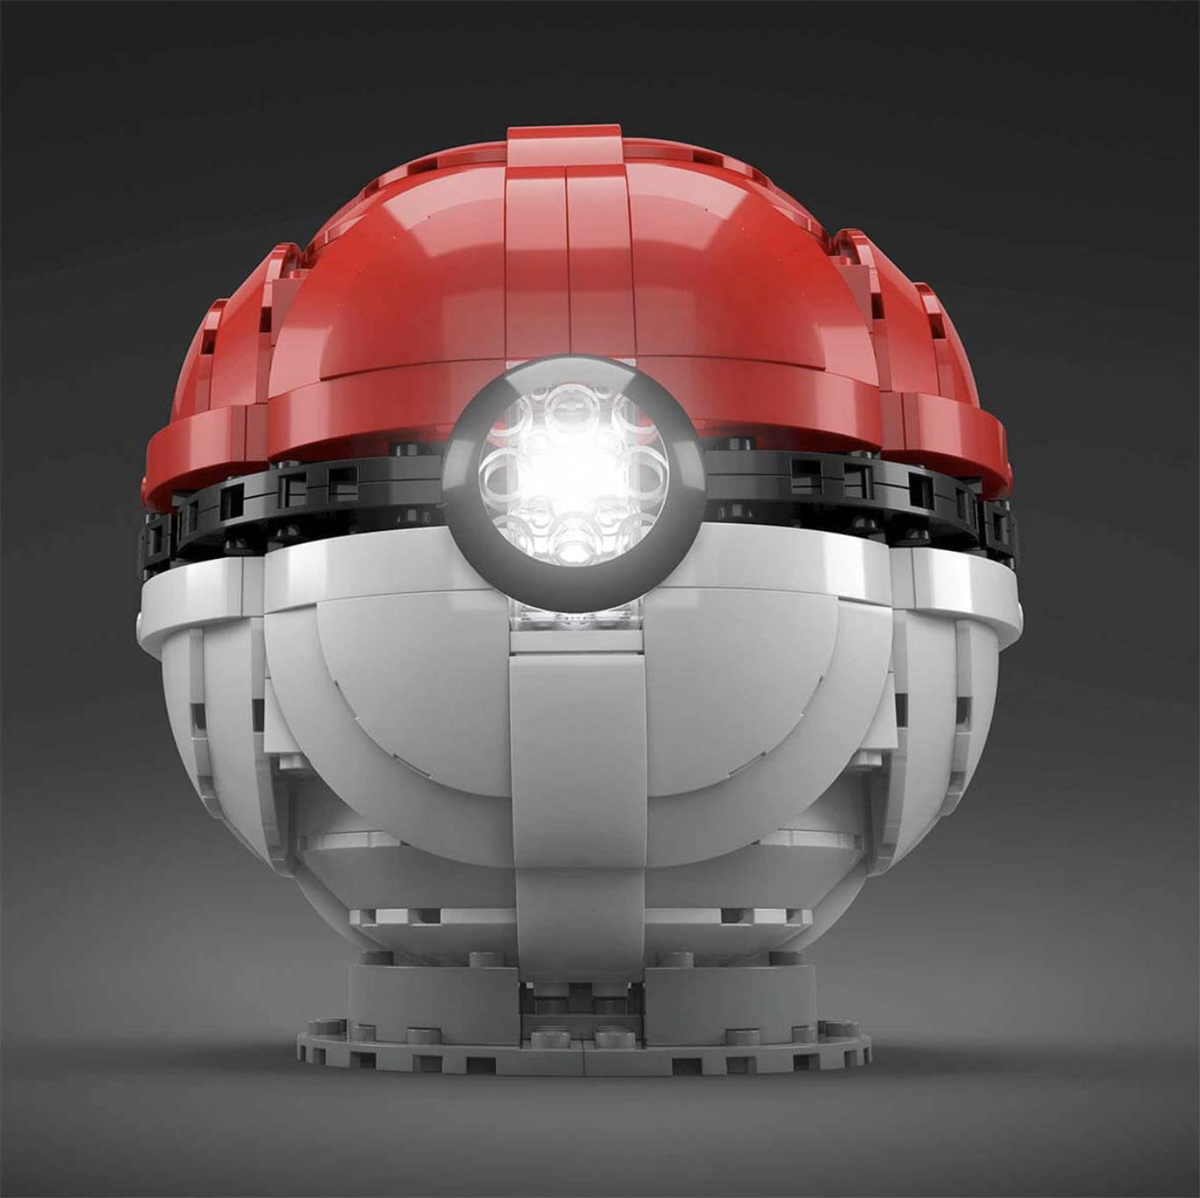 MEGA Pokemon Jumbo Poke Ball HBF53 | Toysall